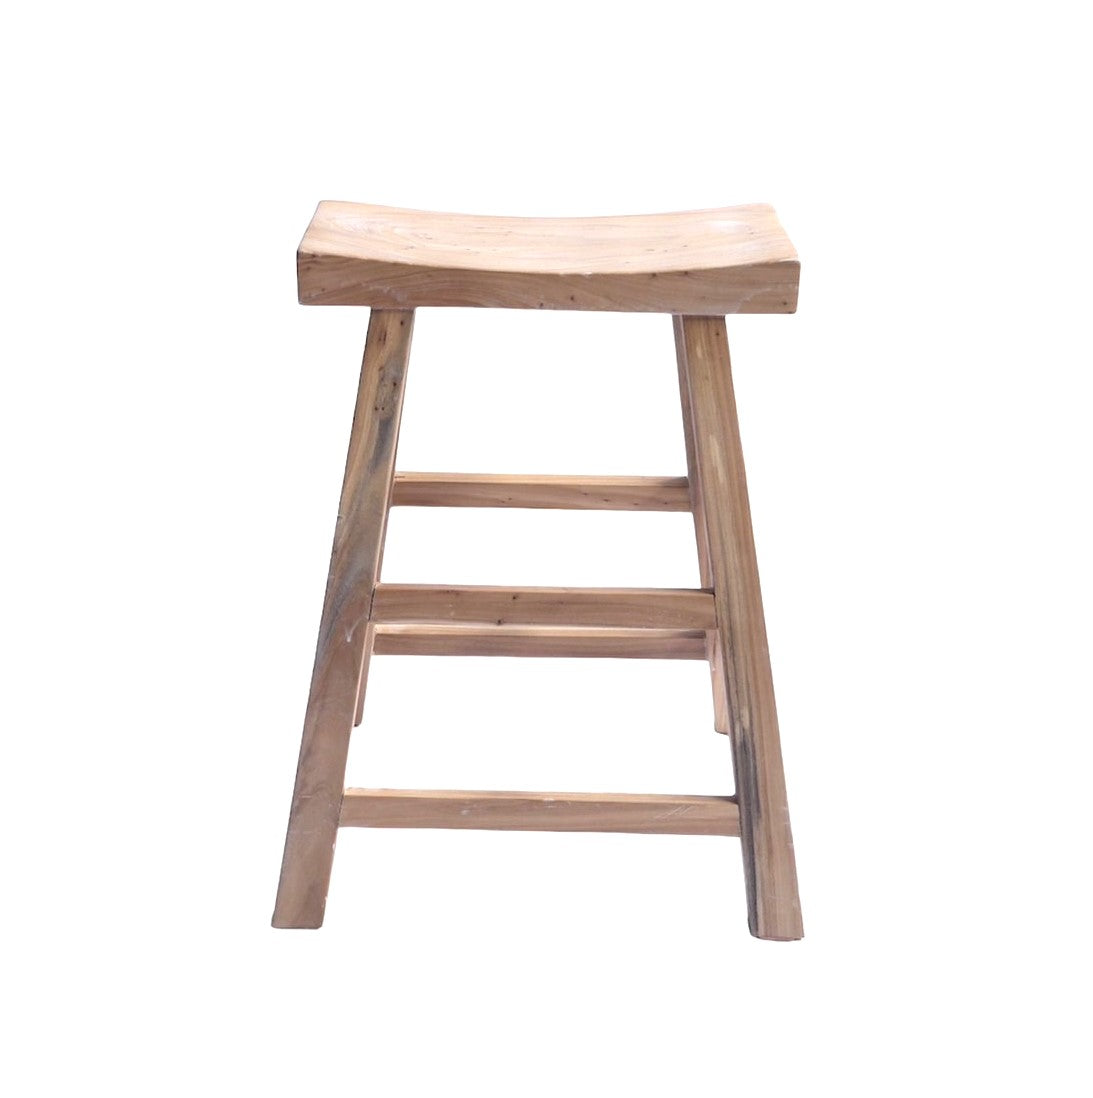 Elm wood High stool